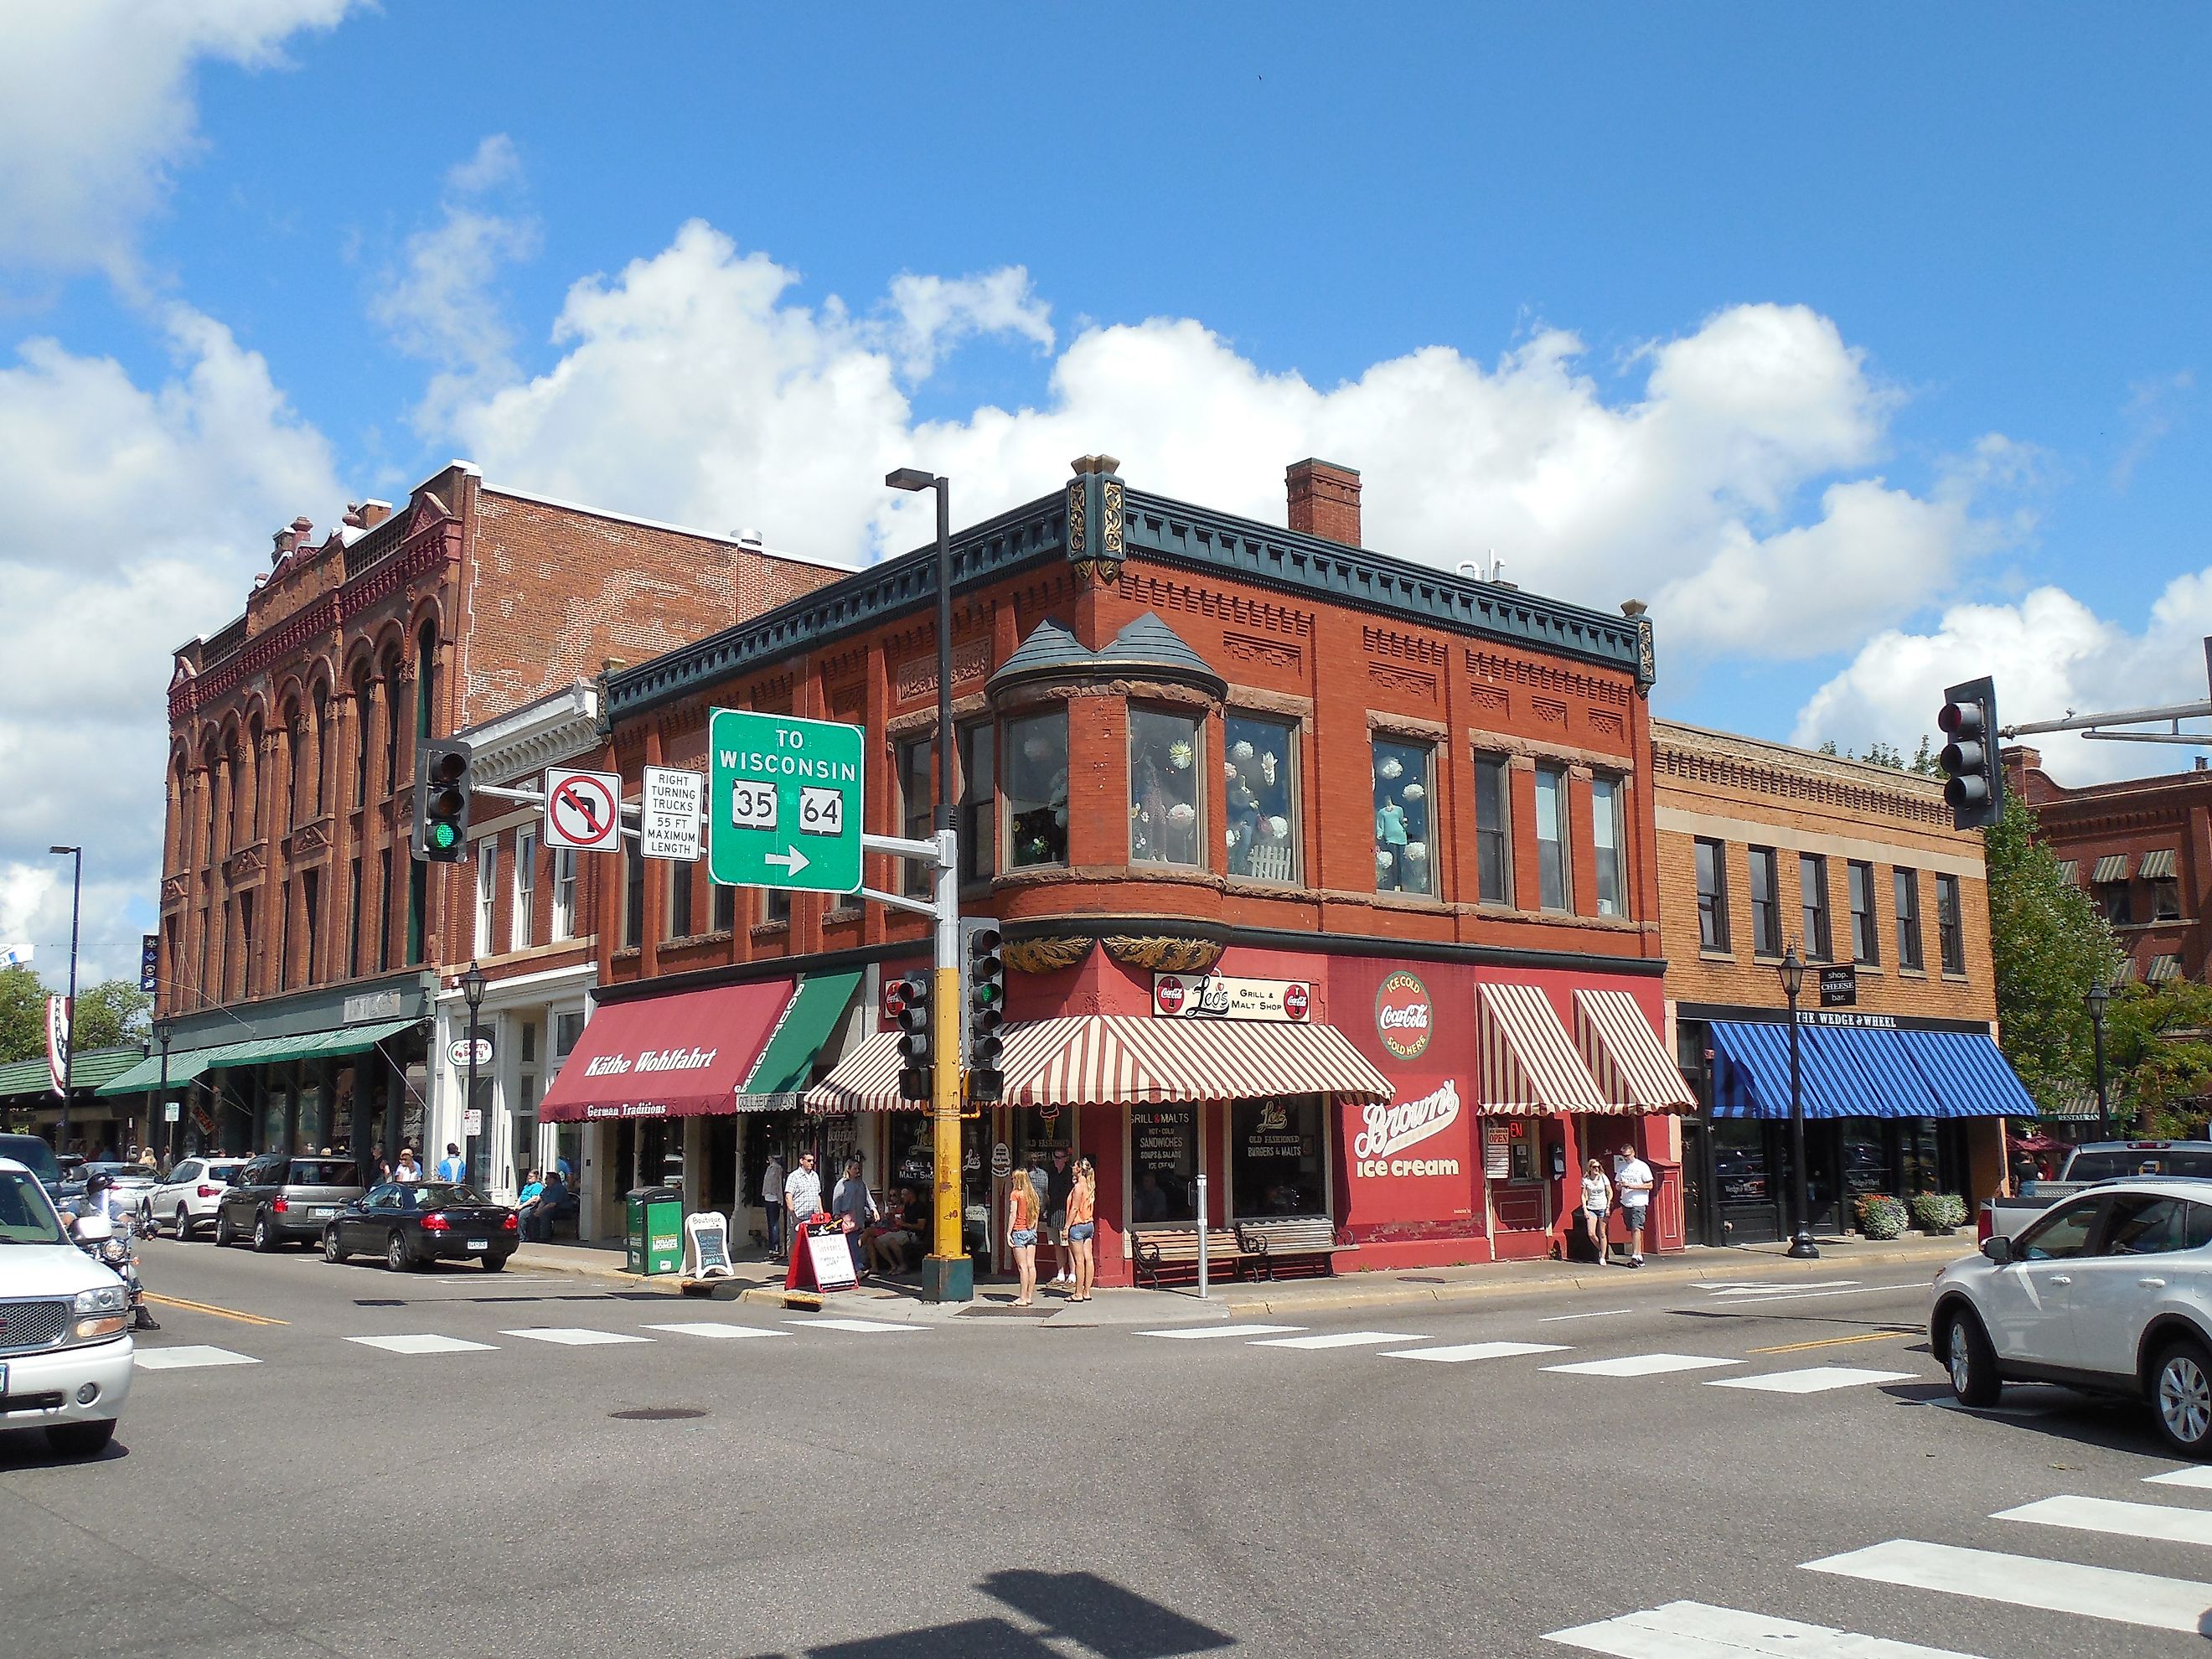 Downtown Stillwater, Minnesota. Image credit: Dougtone, via Wikimedia Commons.